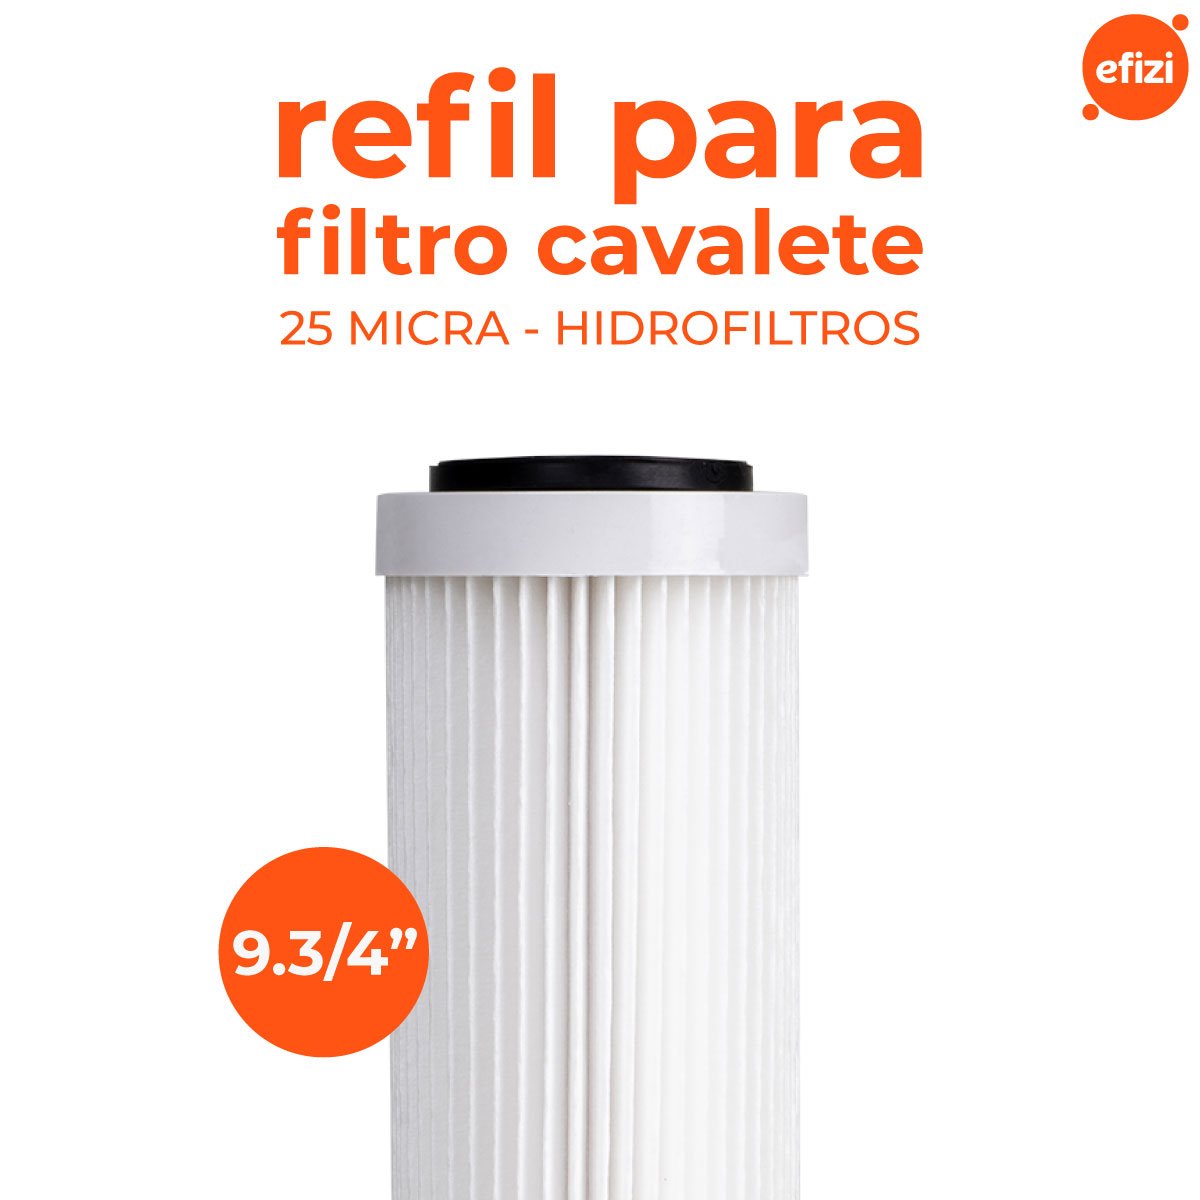 REFIL FILTRO CAVALETE  9.1/4" 25 MICRA LAVÁVEL HIDROFILTROS - 2